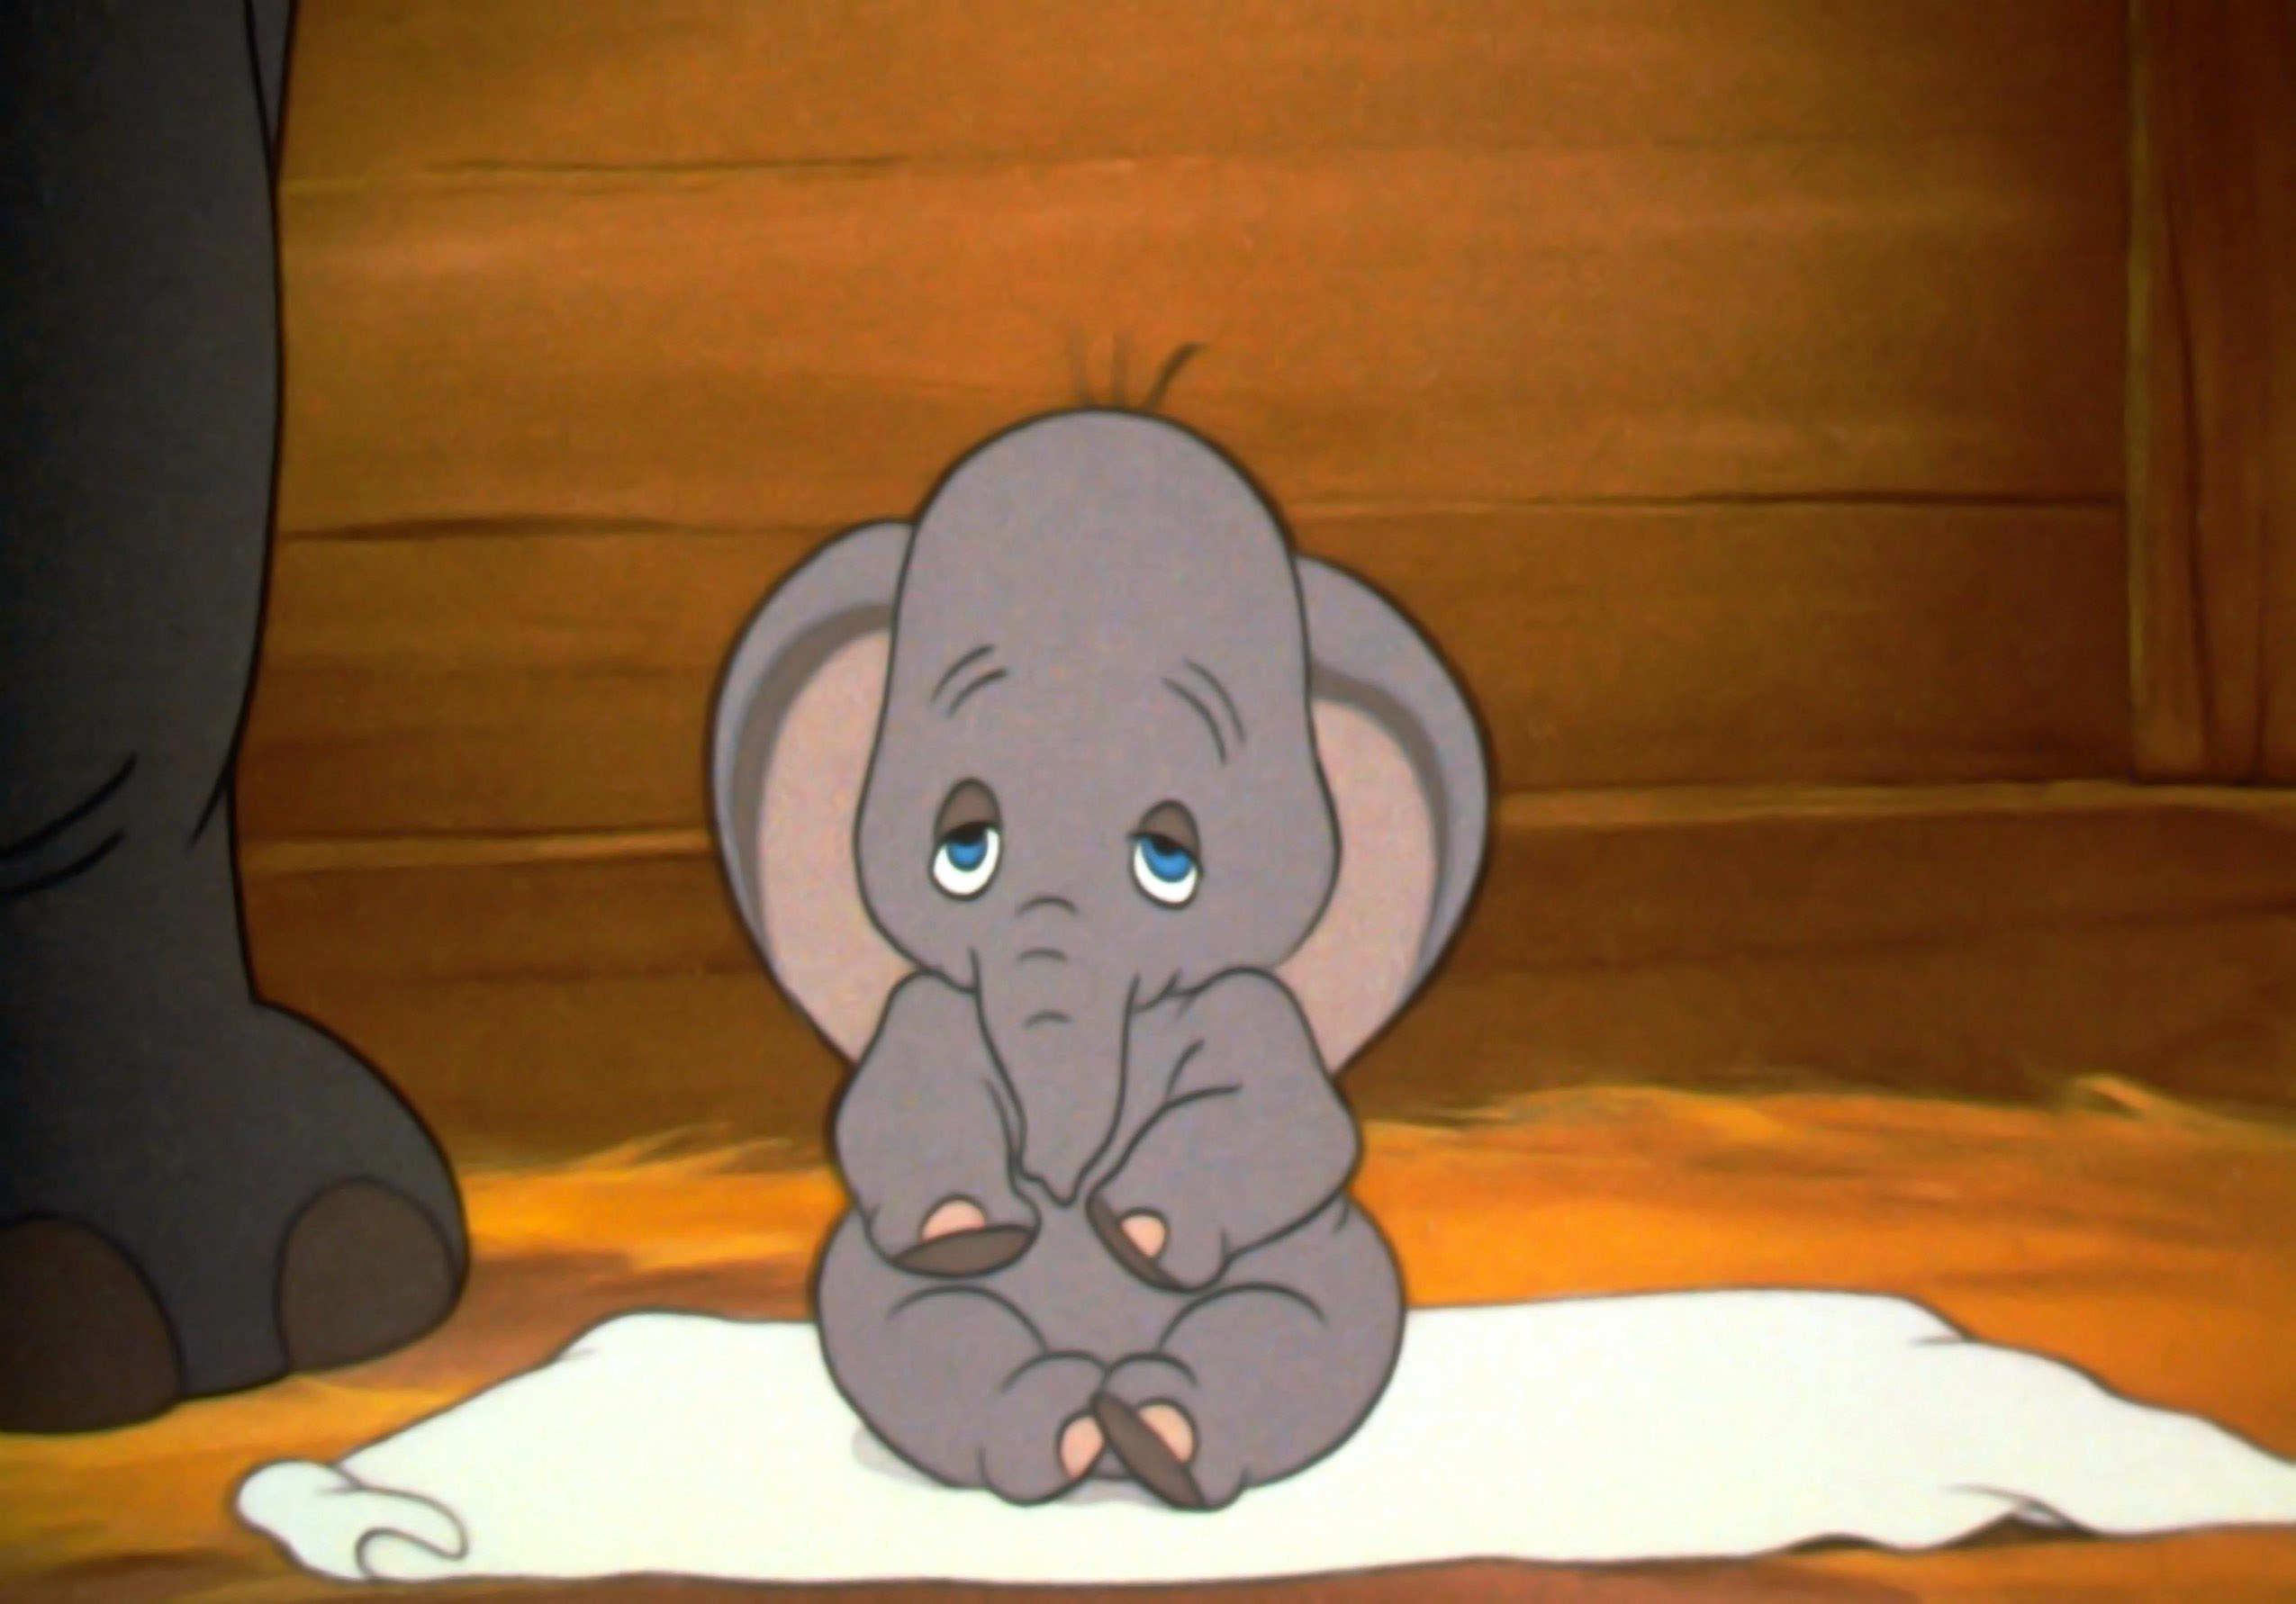 Dumbo sitting on a blanket